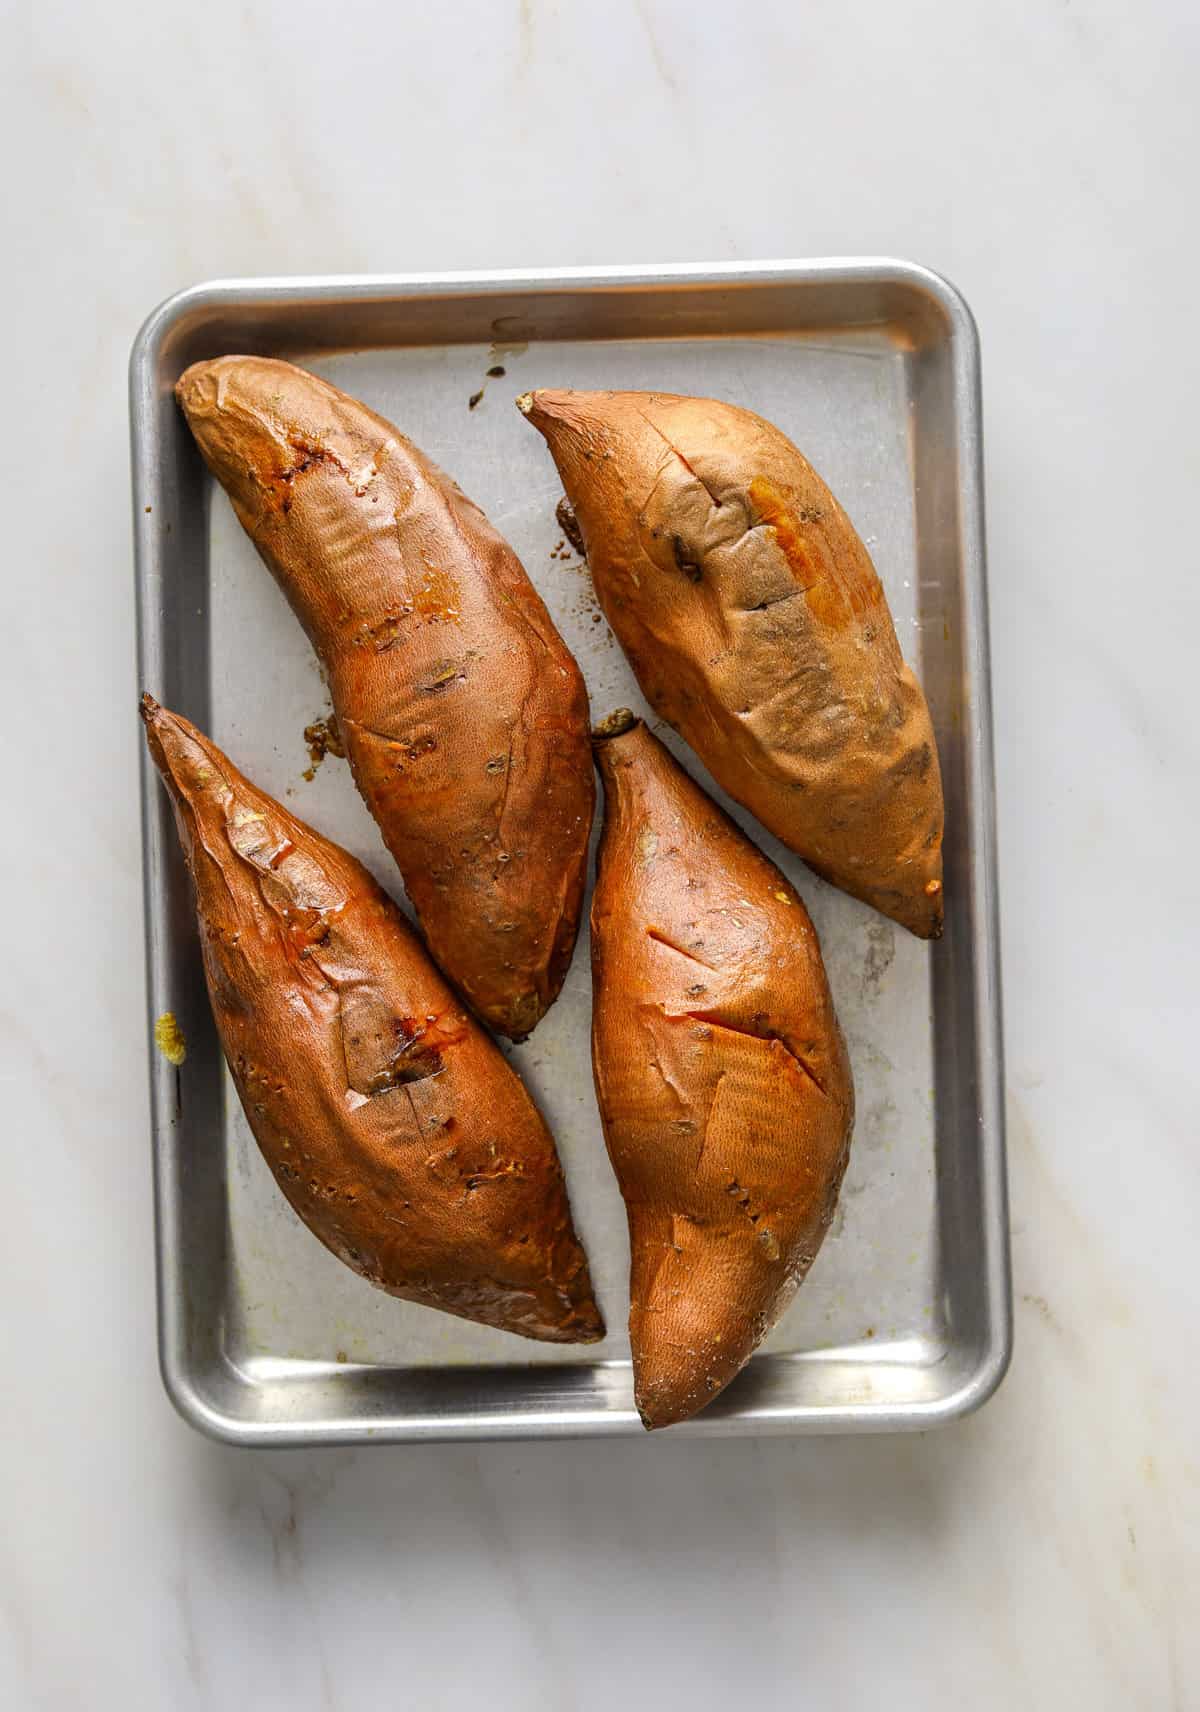 4 whole, roasted sweet potatoes on a baking tray.